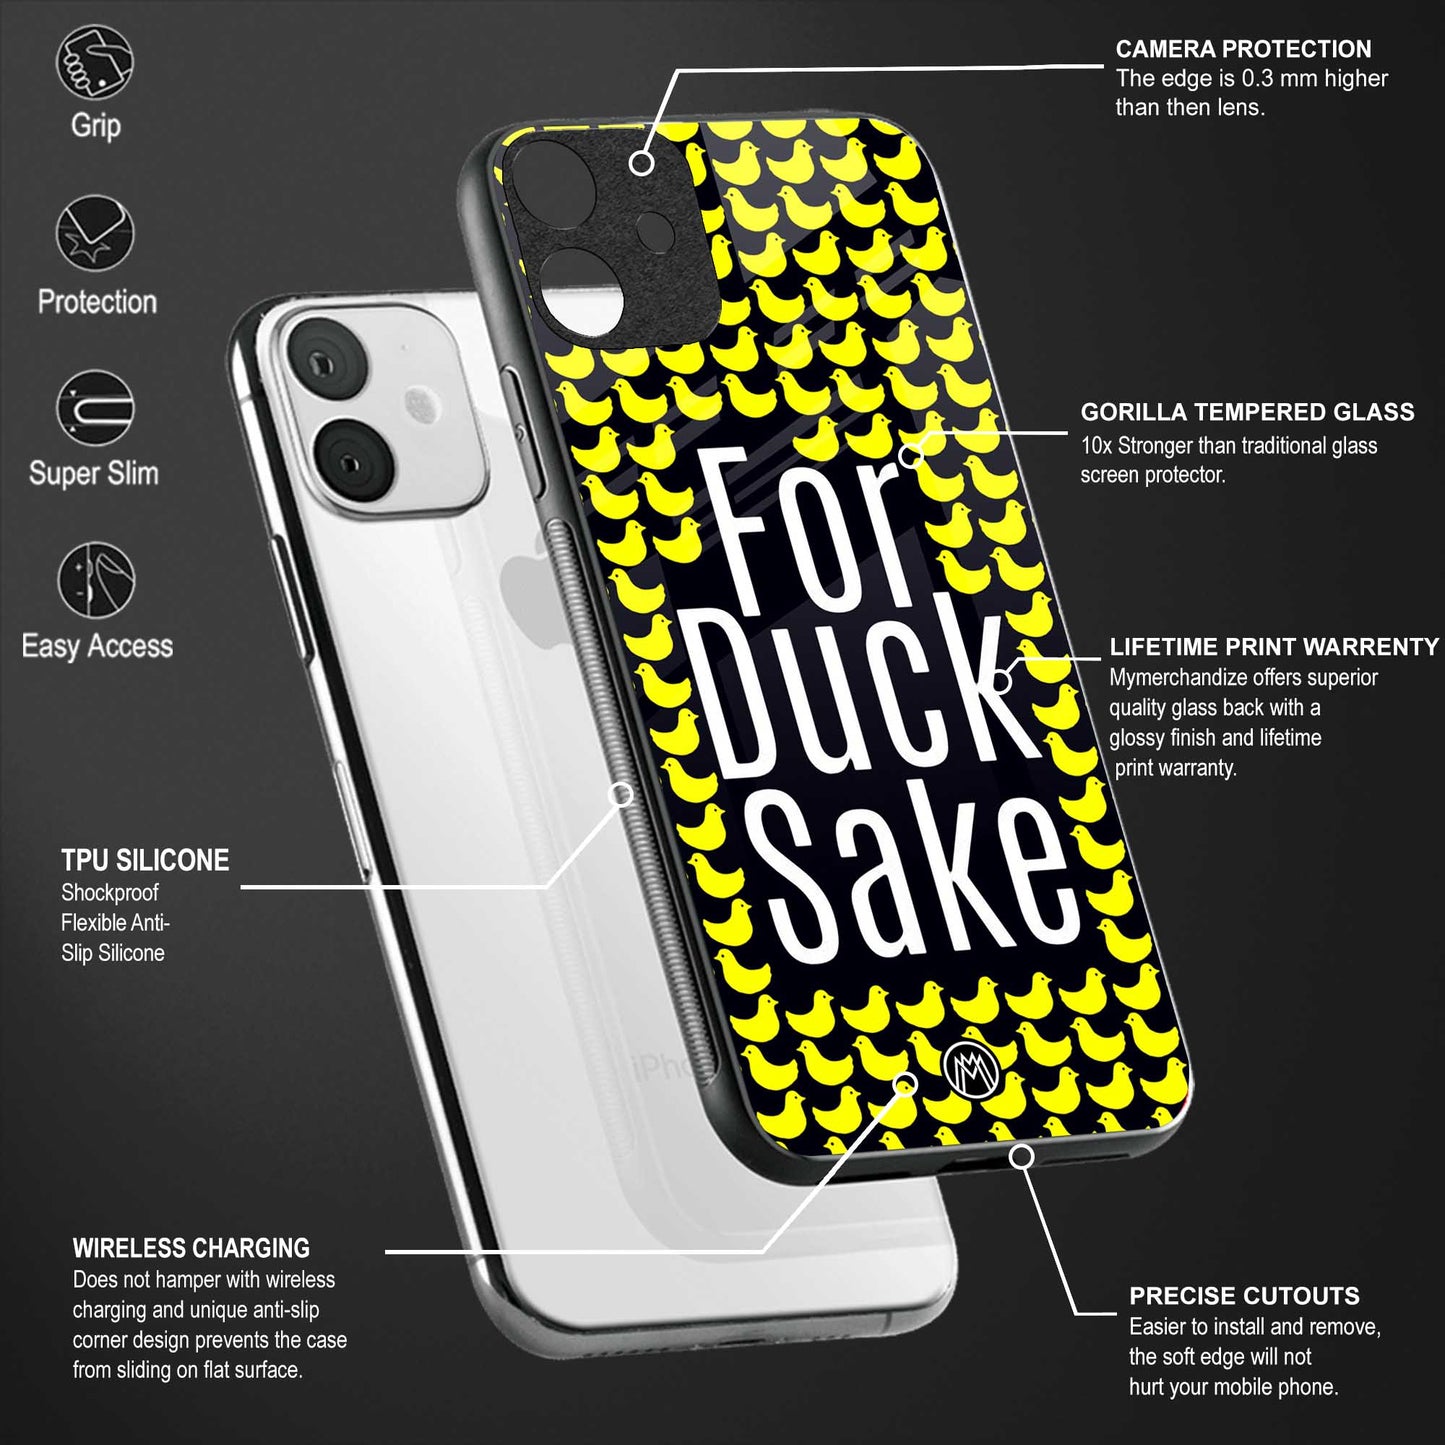 for duck sake back phone cover | glass case for vivo y16